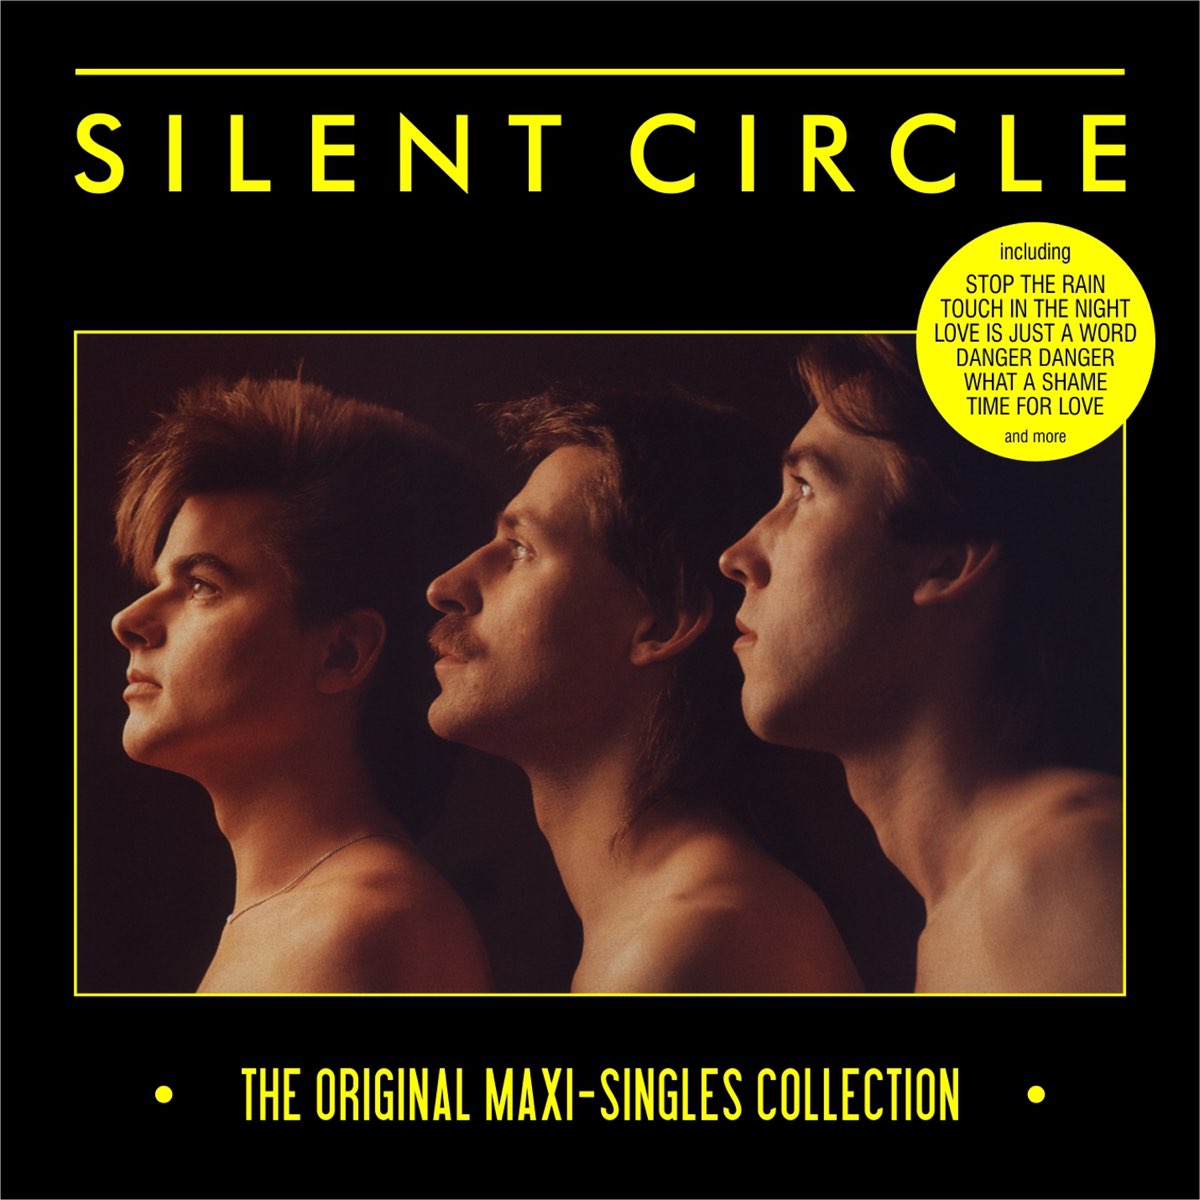 Touch the night silent песня. Silent circle. Silent circle Touch in the Night. The Original Maxi-Singles collection. Группа Silent circle.